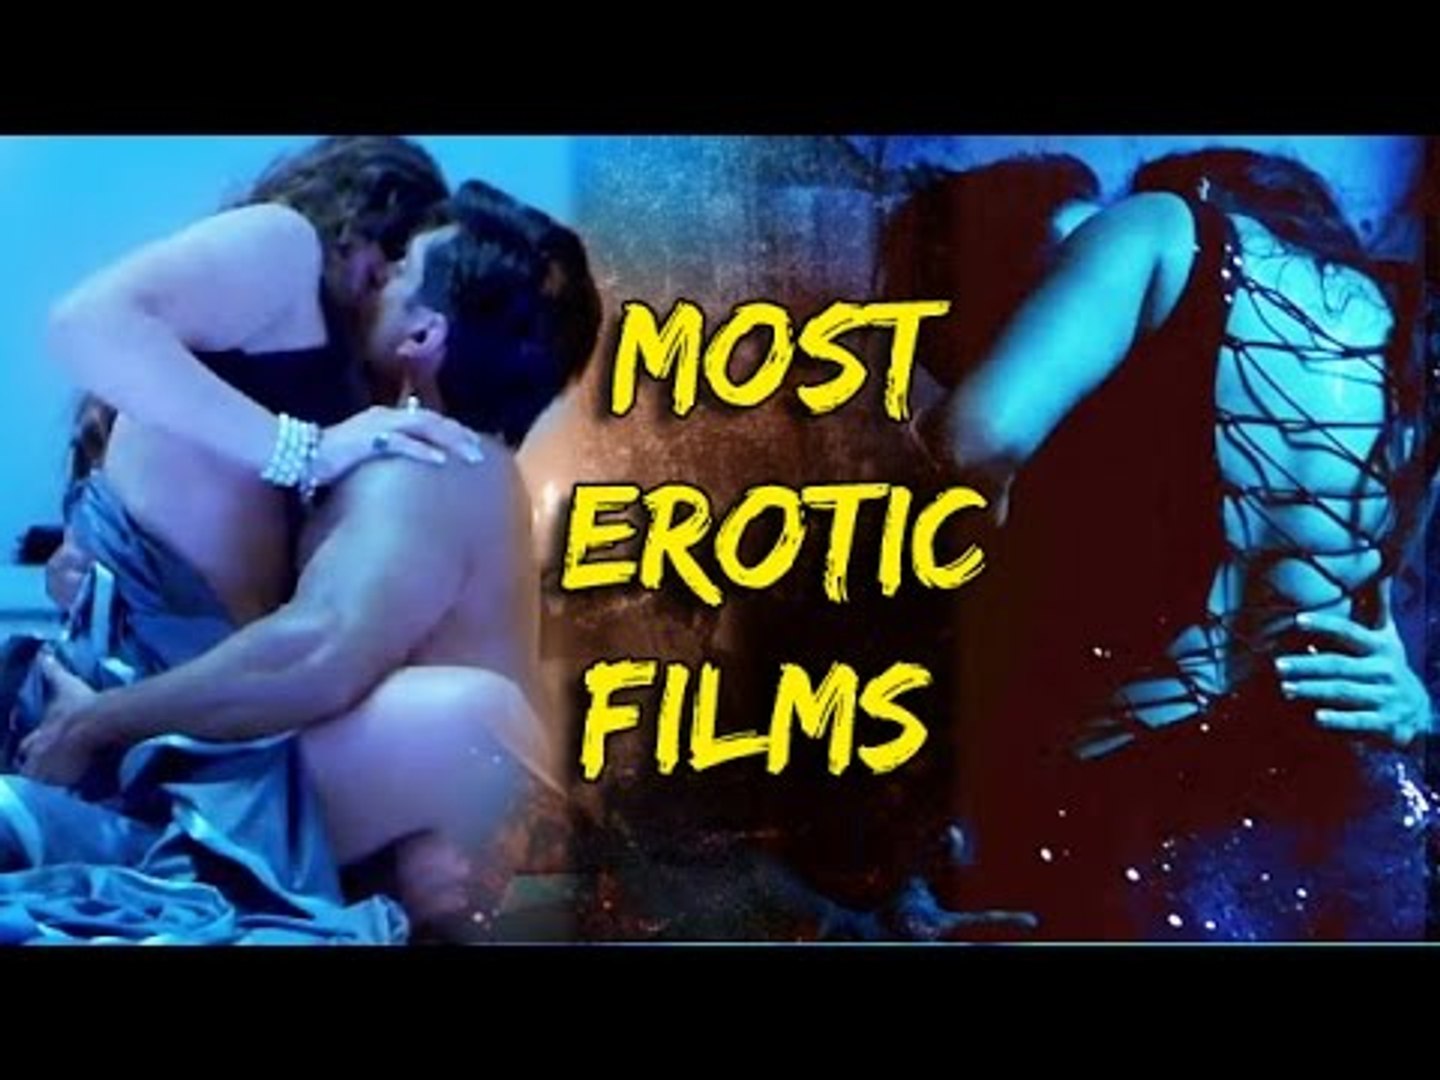 Most erotic films